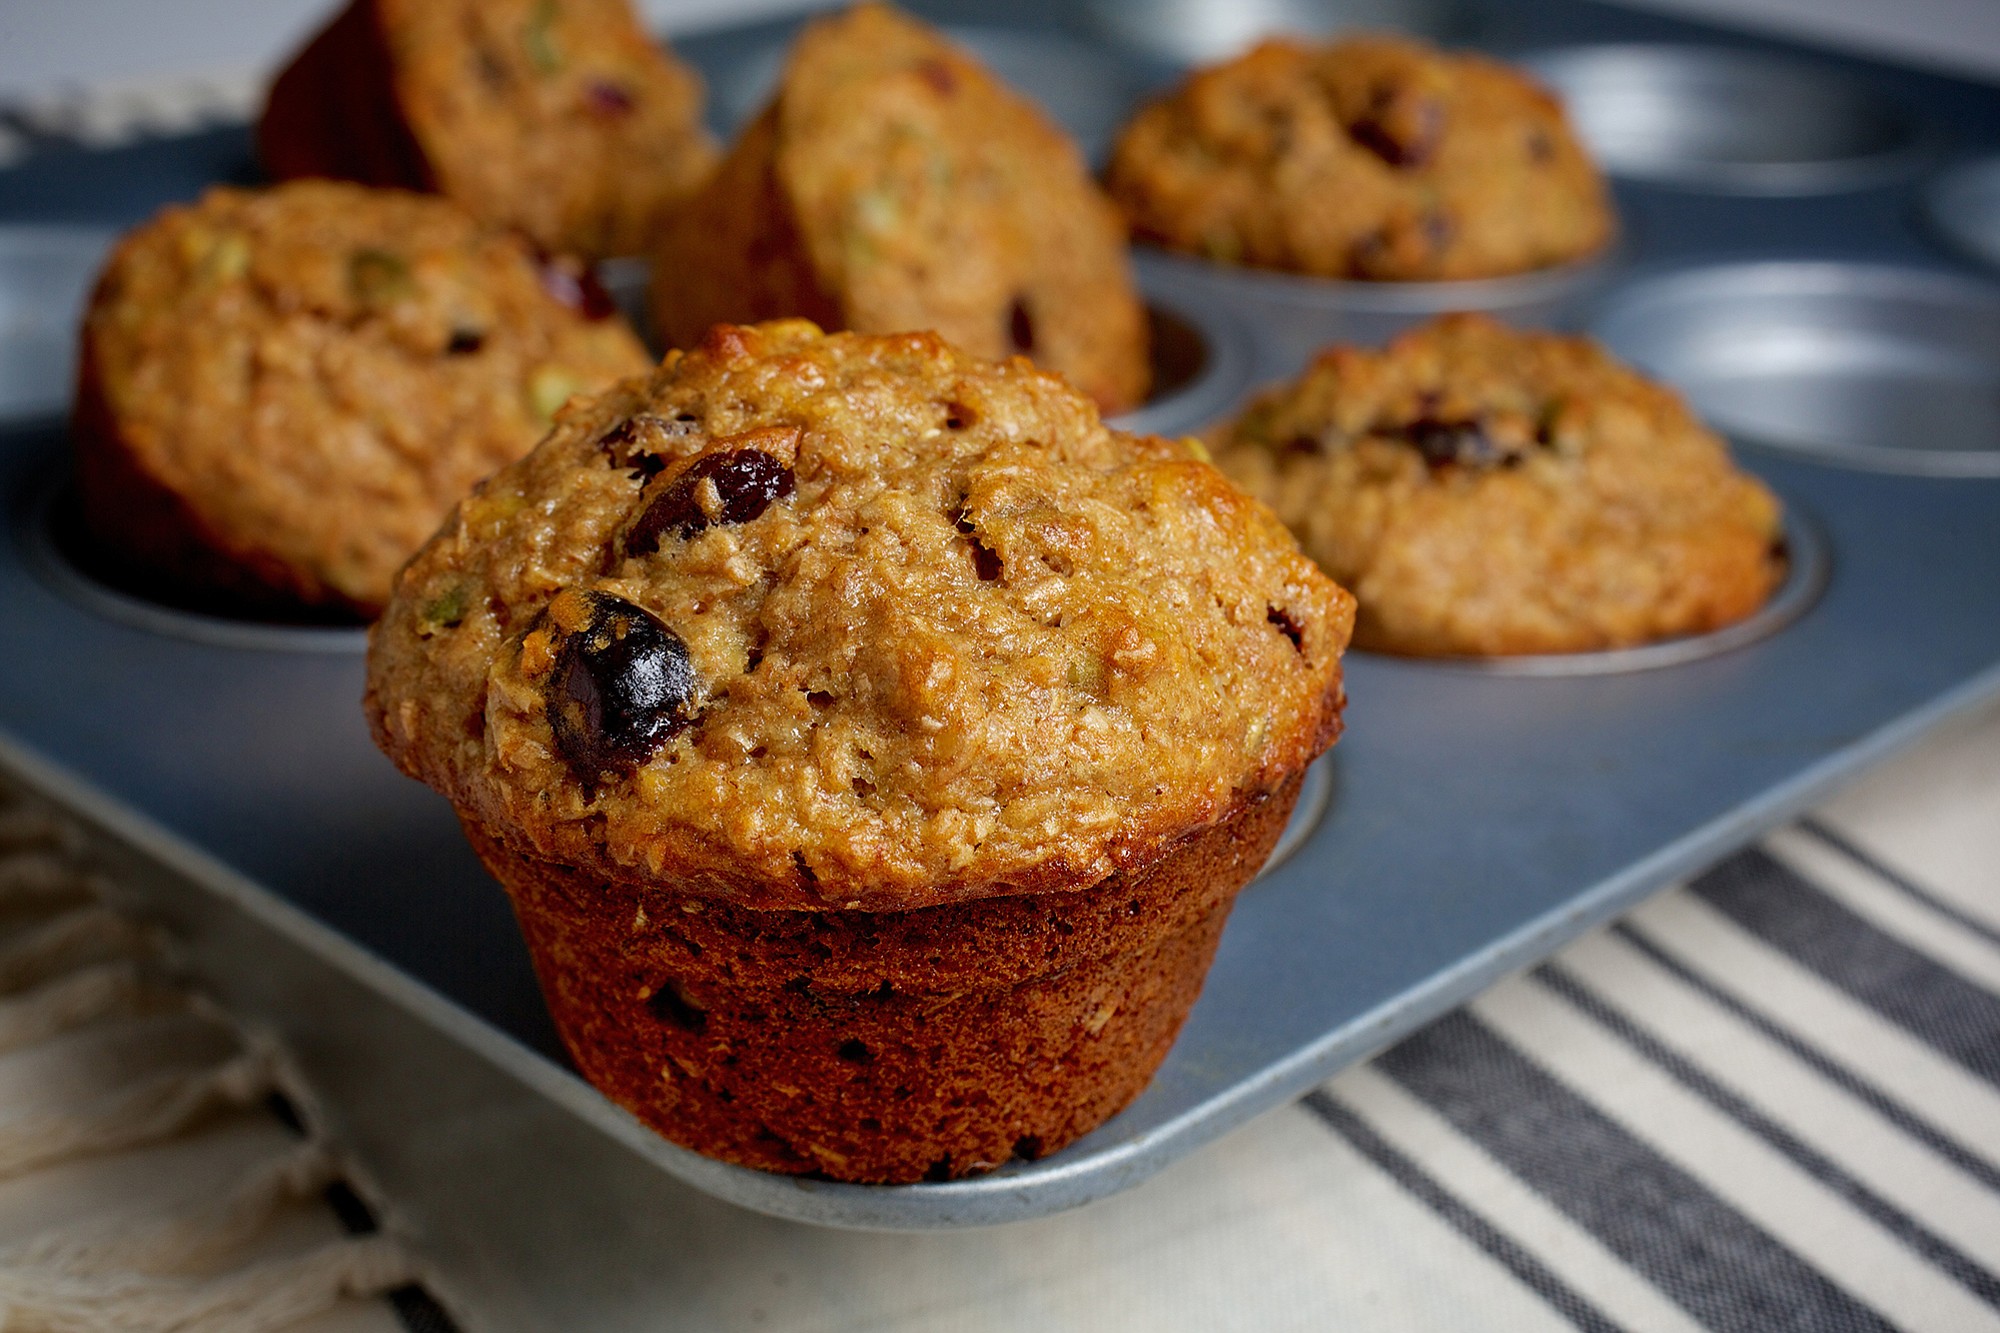 Making Sunday a little sweeter: Sunday Morning Muffins.